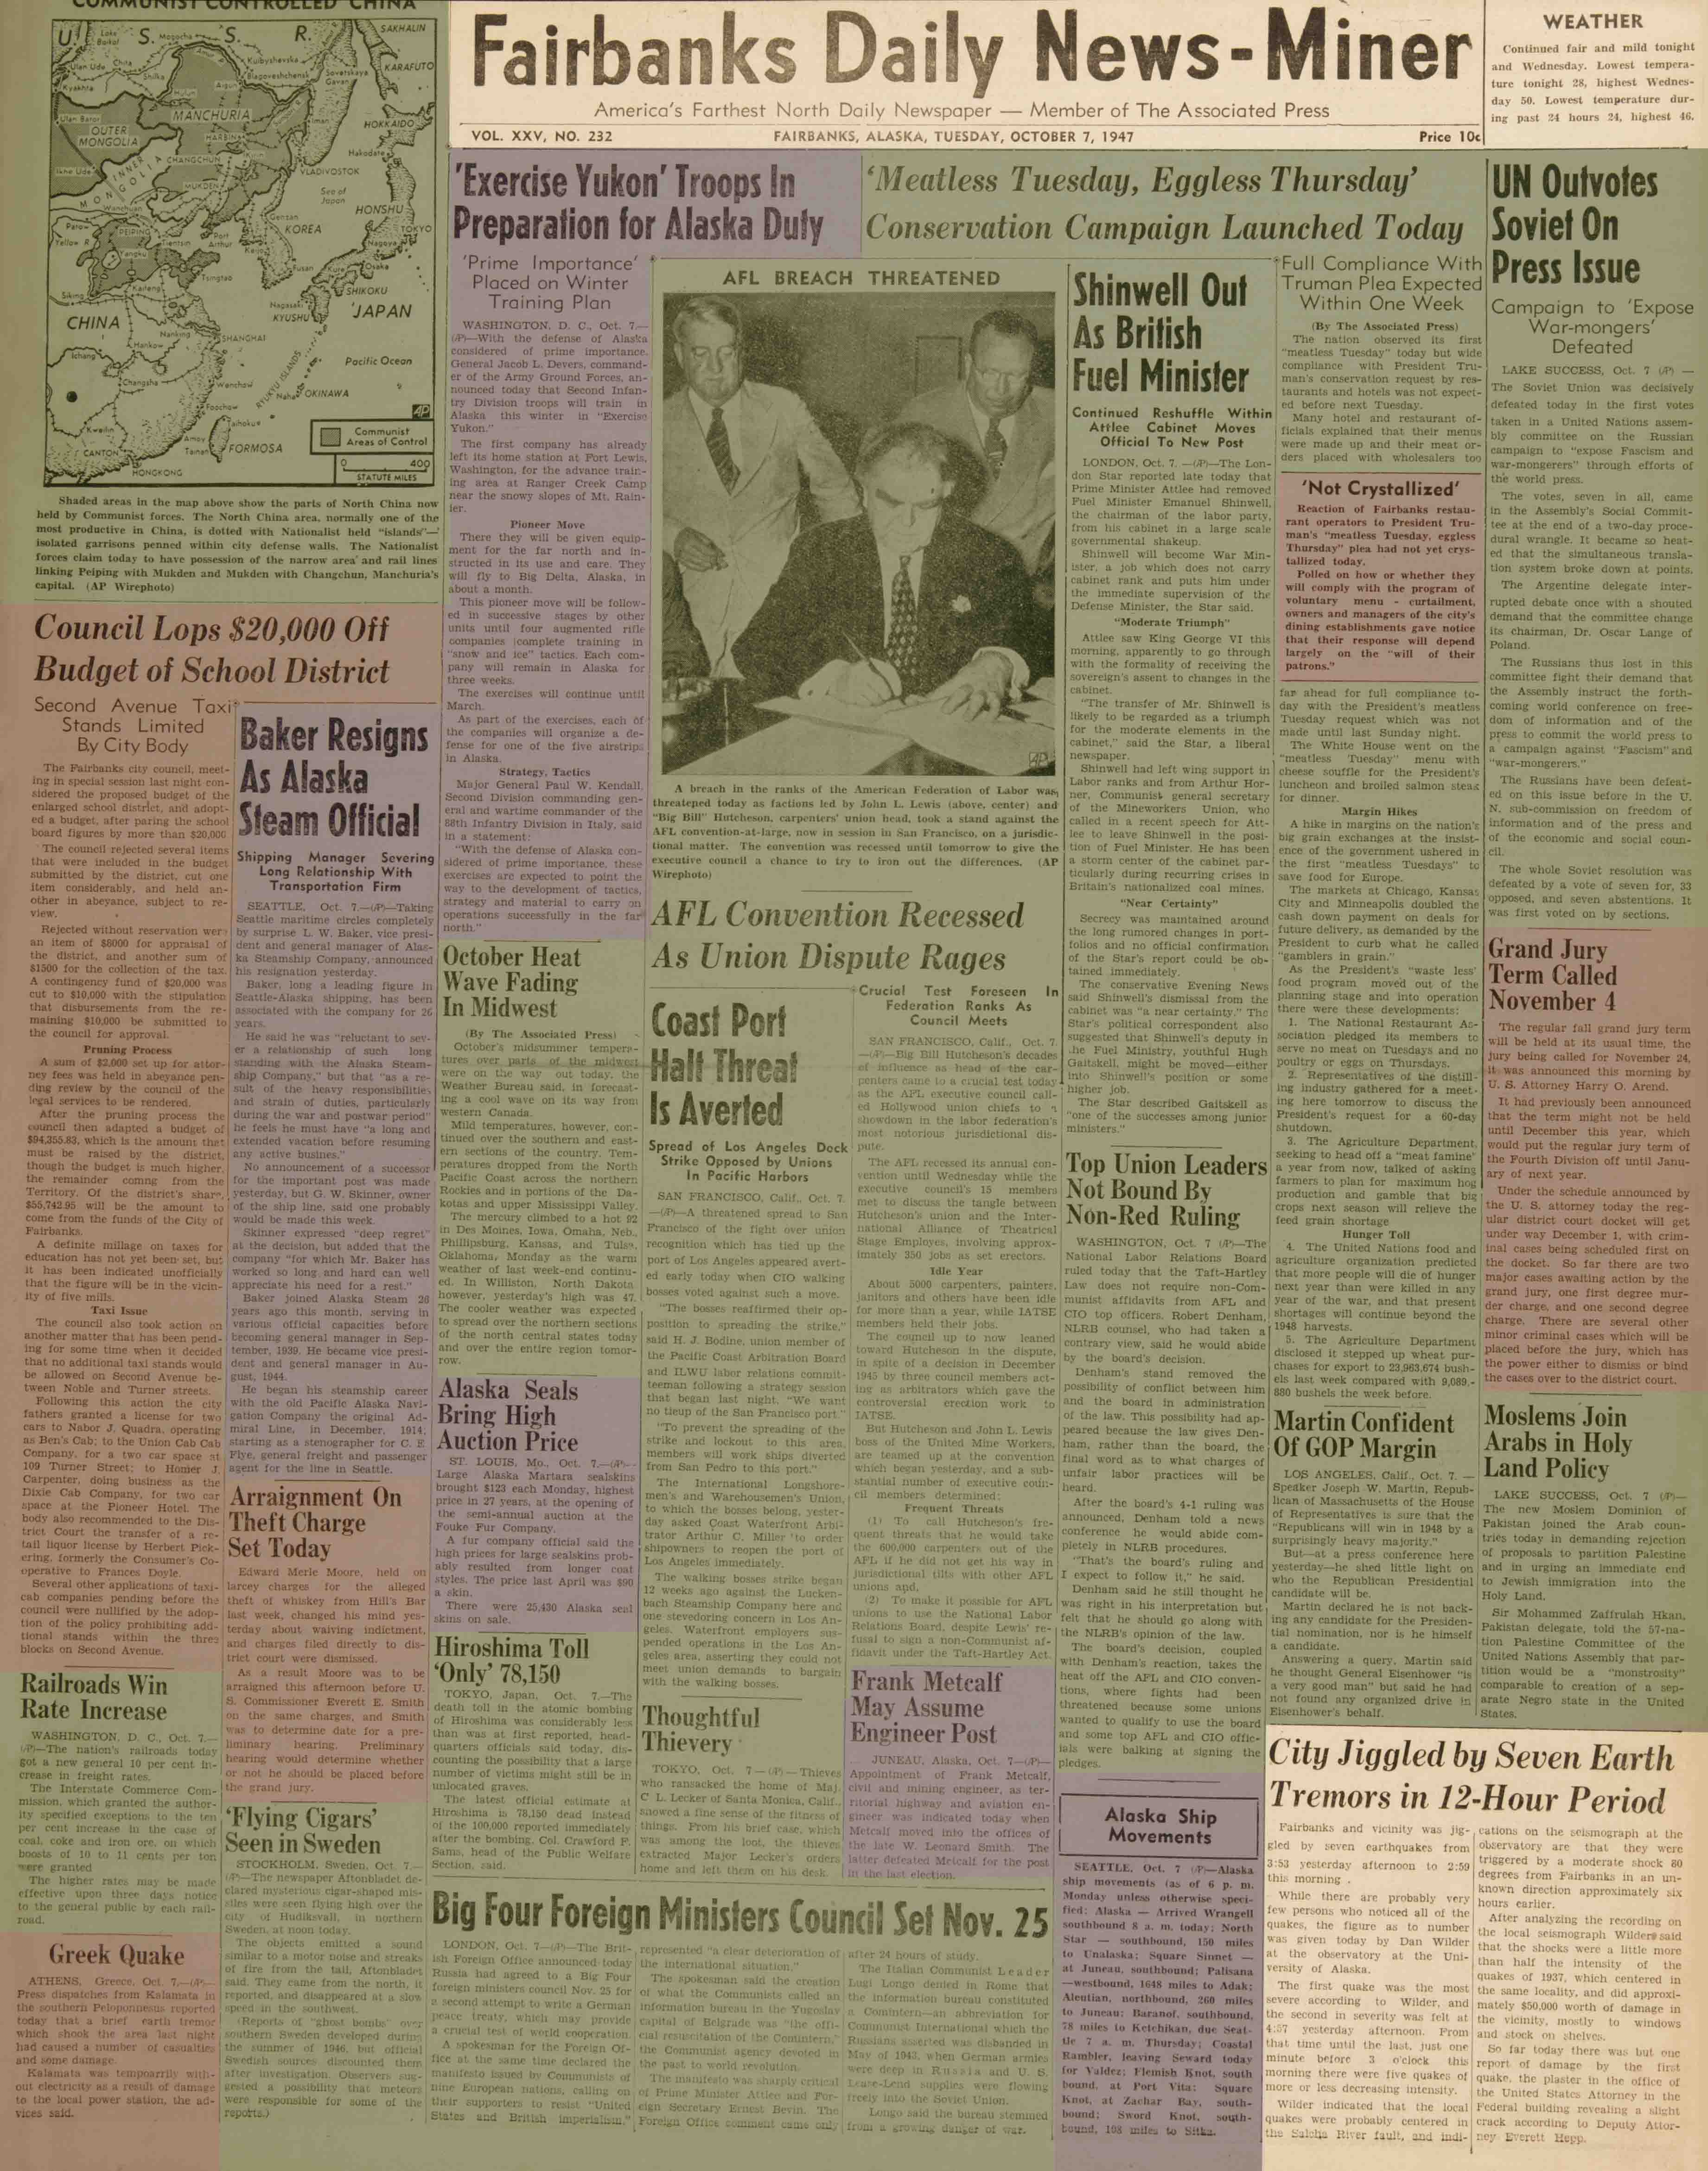 1947 October 7, Fairbanks Daily News-Miner (pg 1)